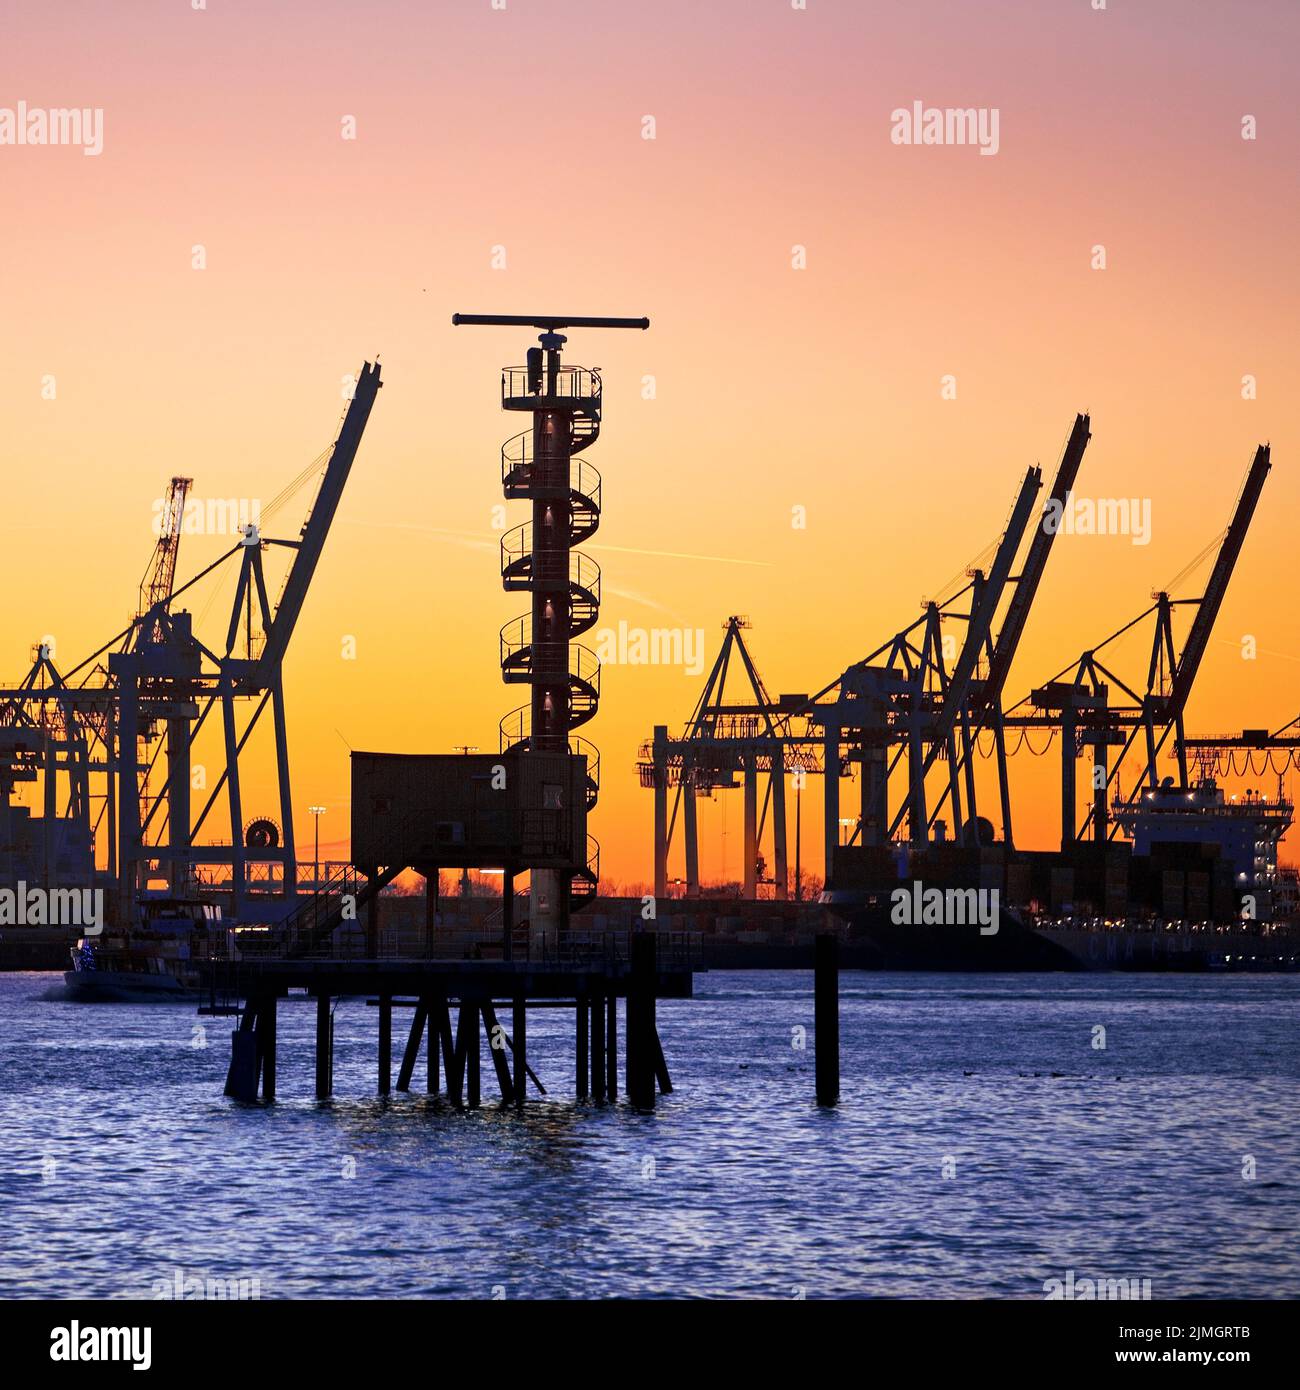 Radar tower and loading cranes at the Burchradkai container terminal at sunset, Hamburg, Germany Stock Photo